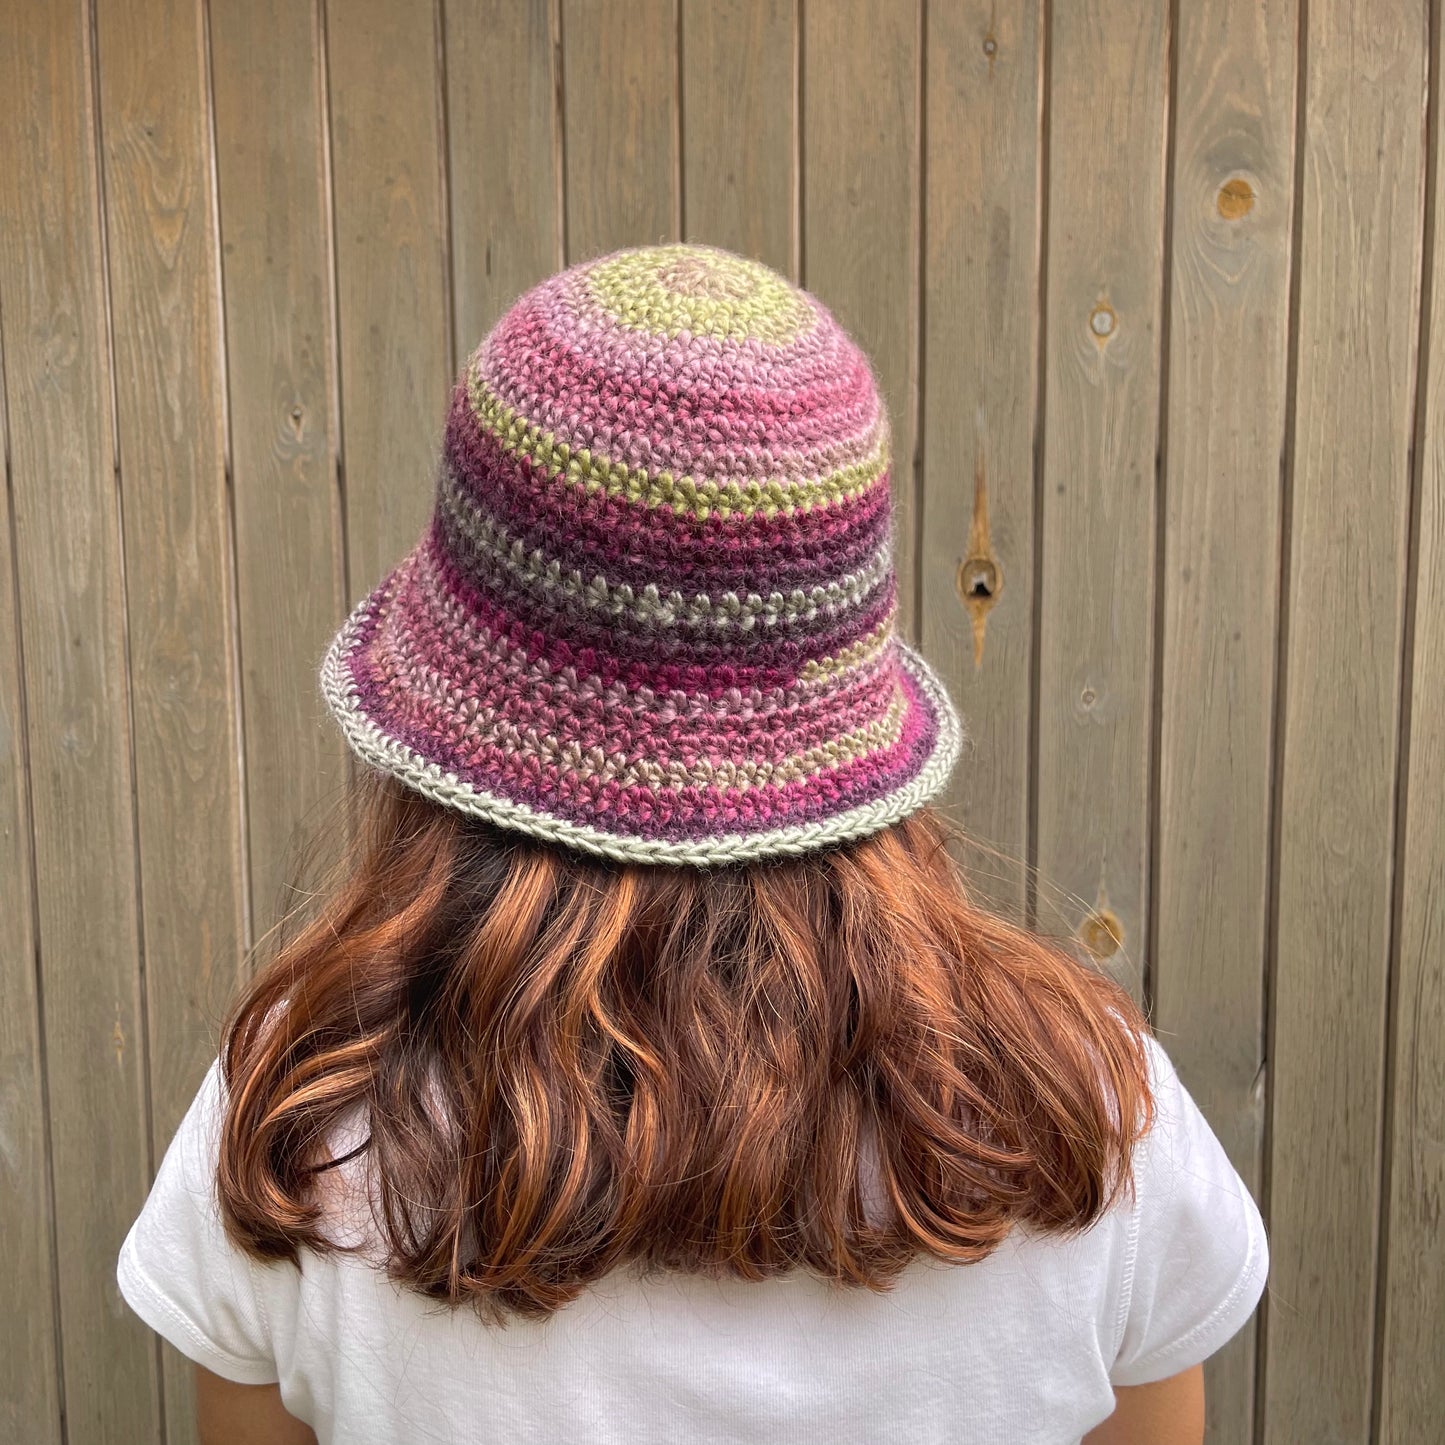 Handmade  green and purple ombré crochet bucket hat